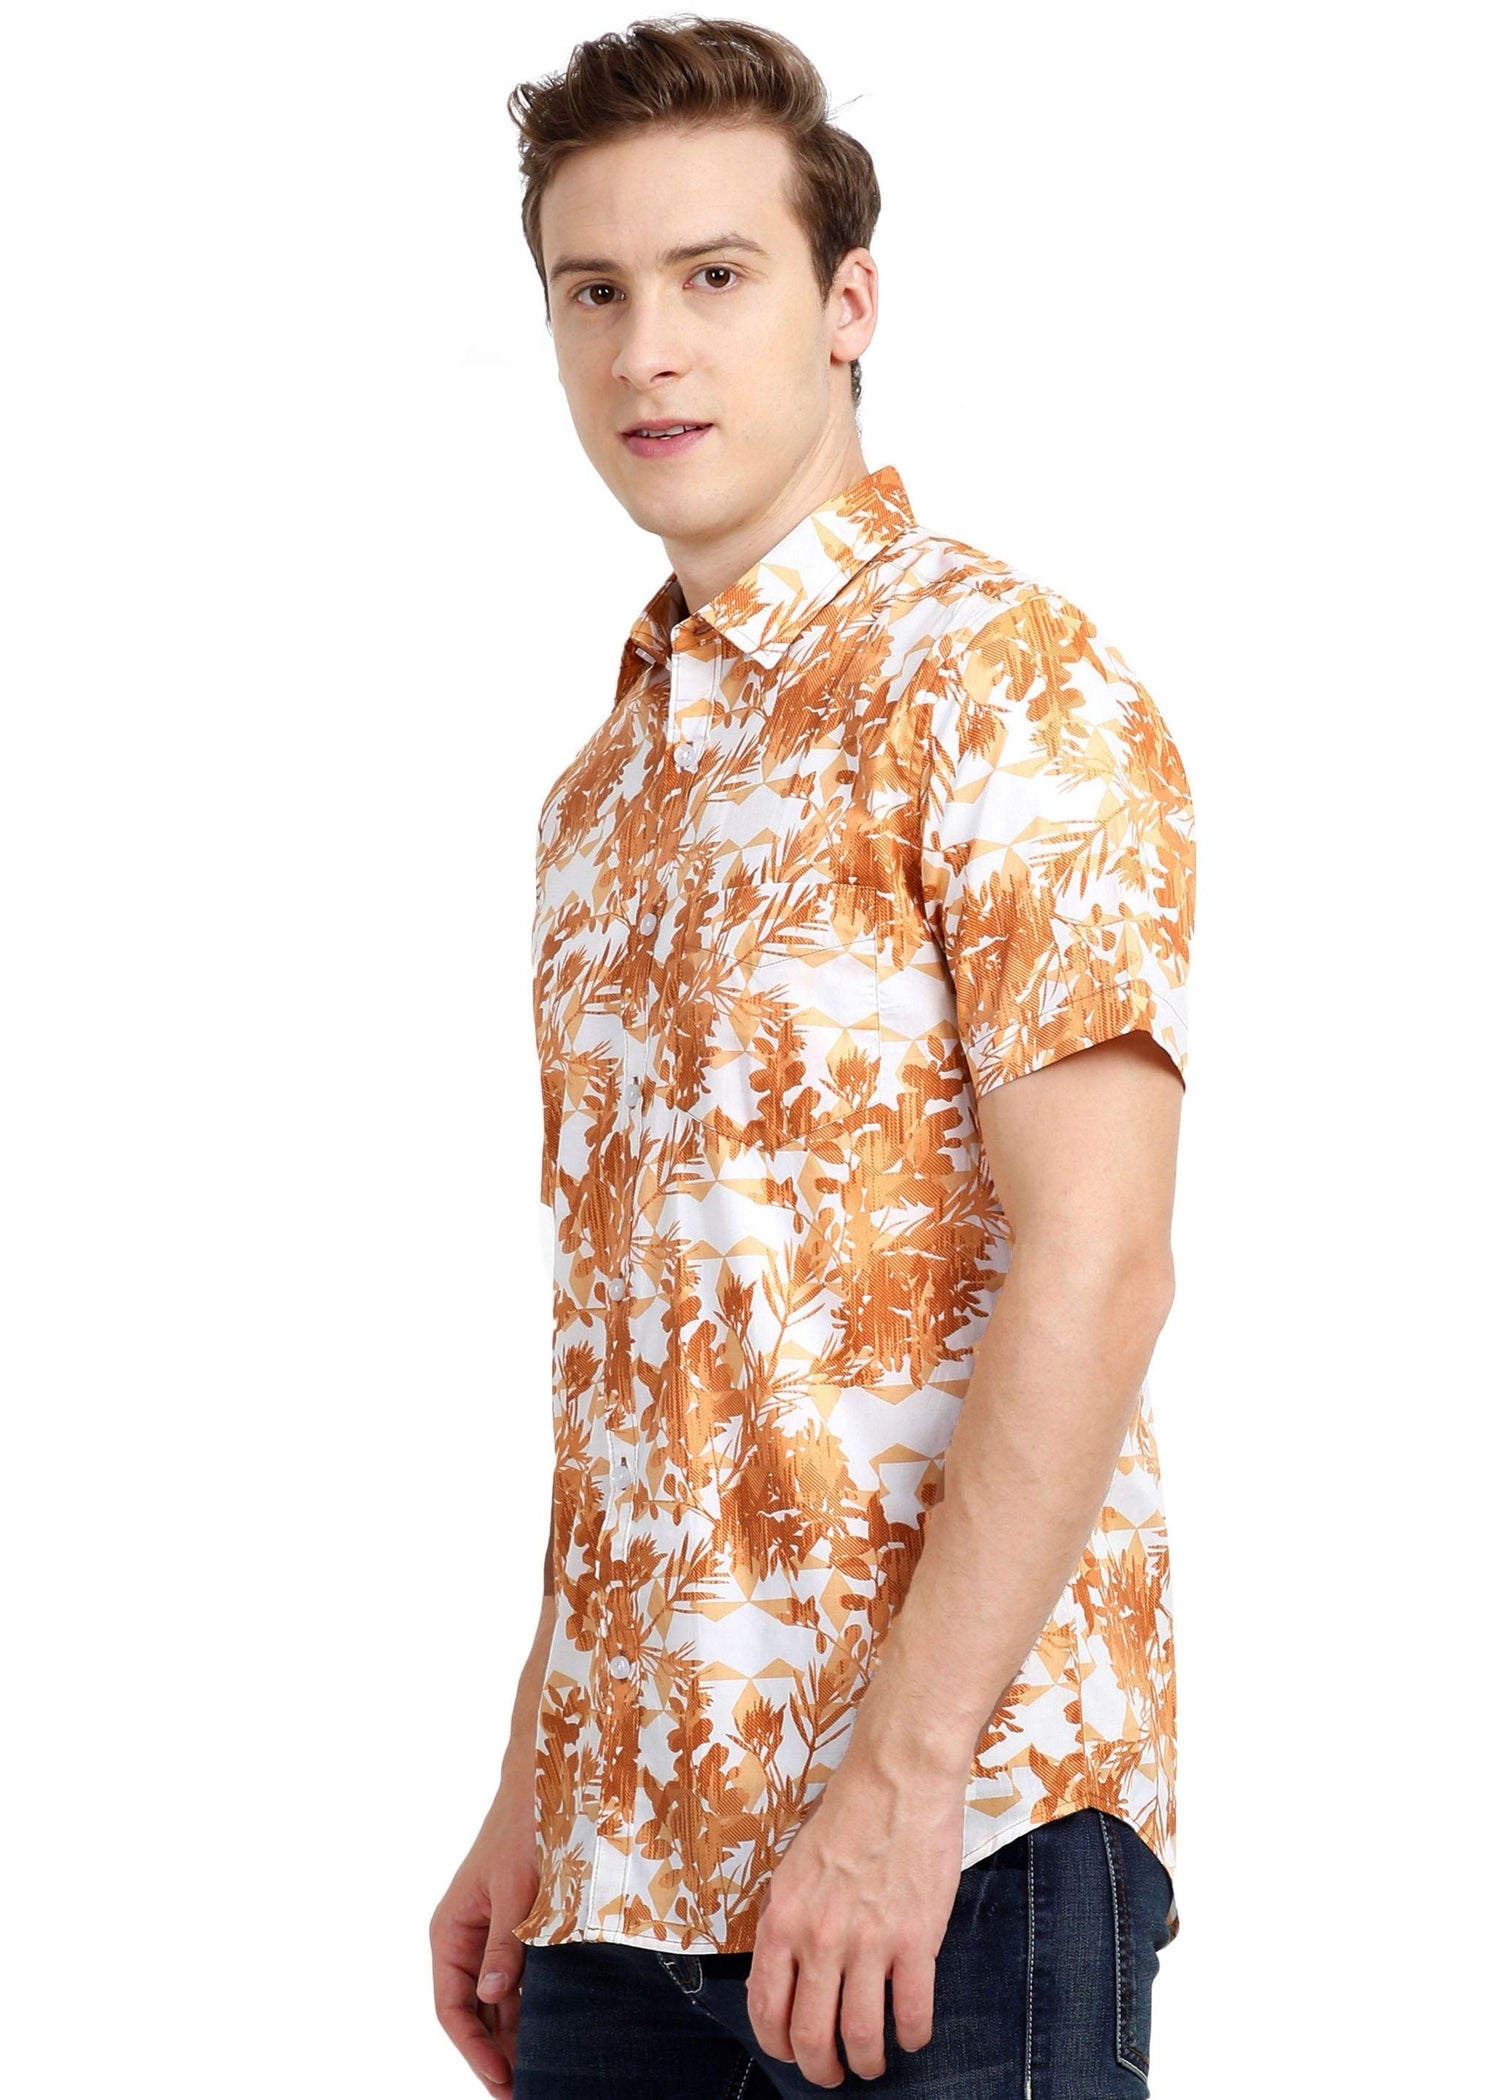 Tusok-walnutVacation-Printed Shirtimage-Orange Zigzag (2)